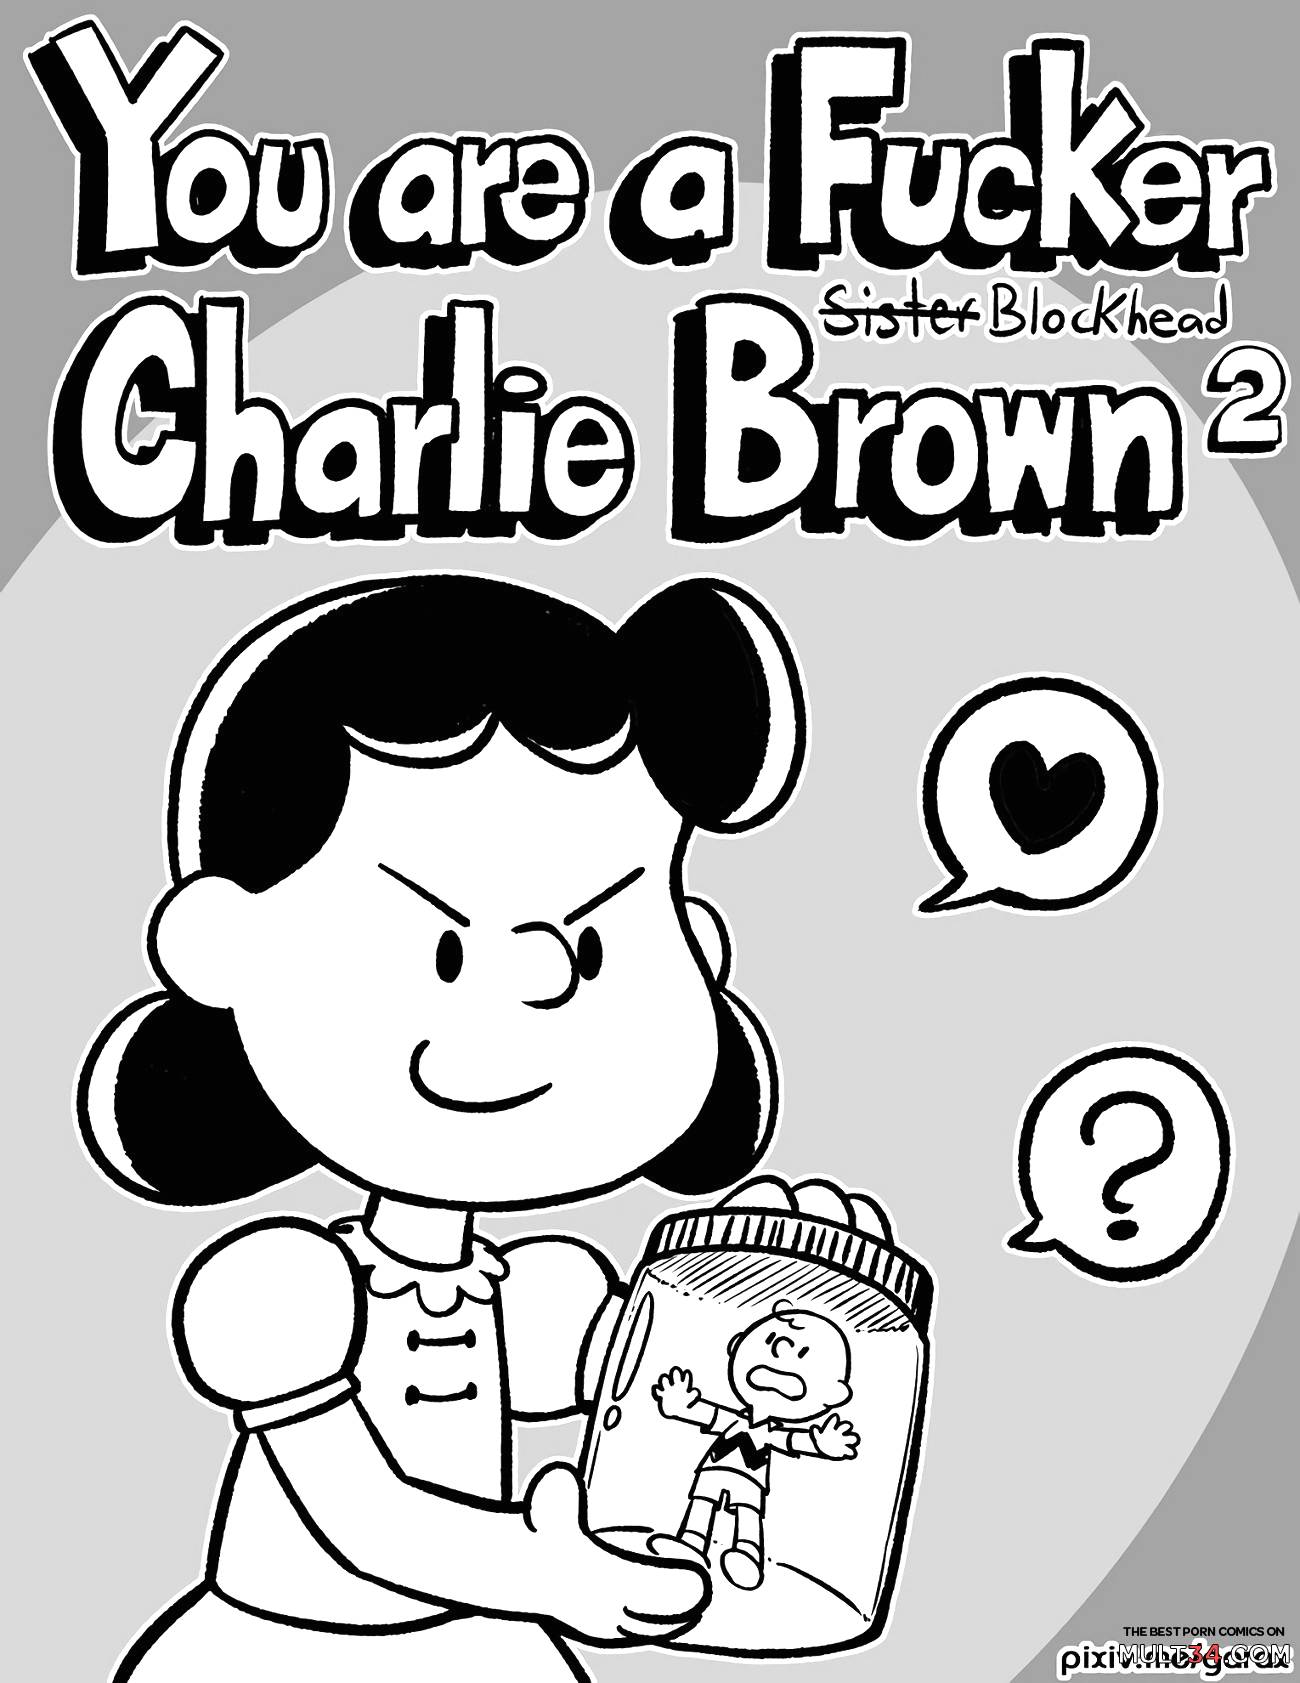 Charley brown porn